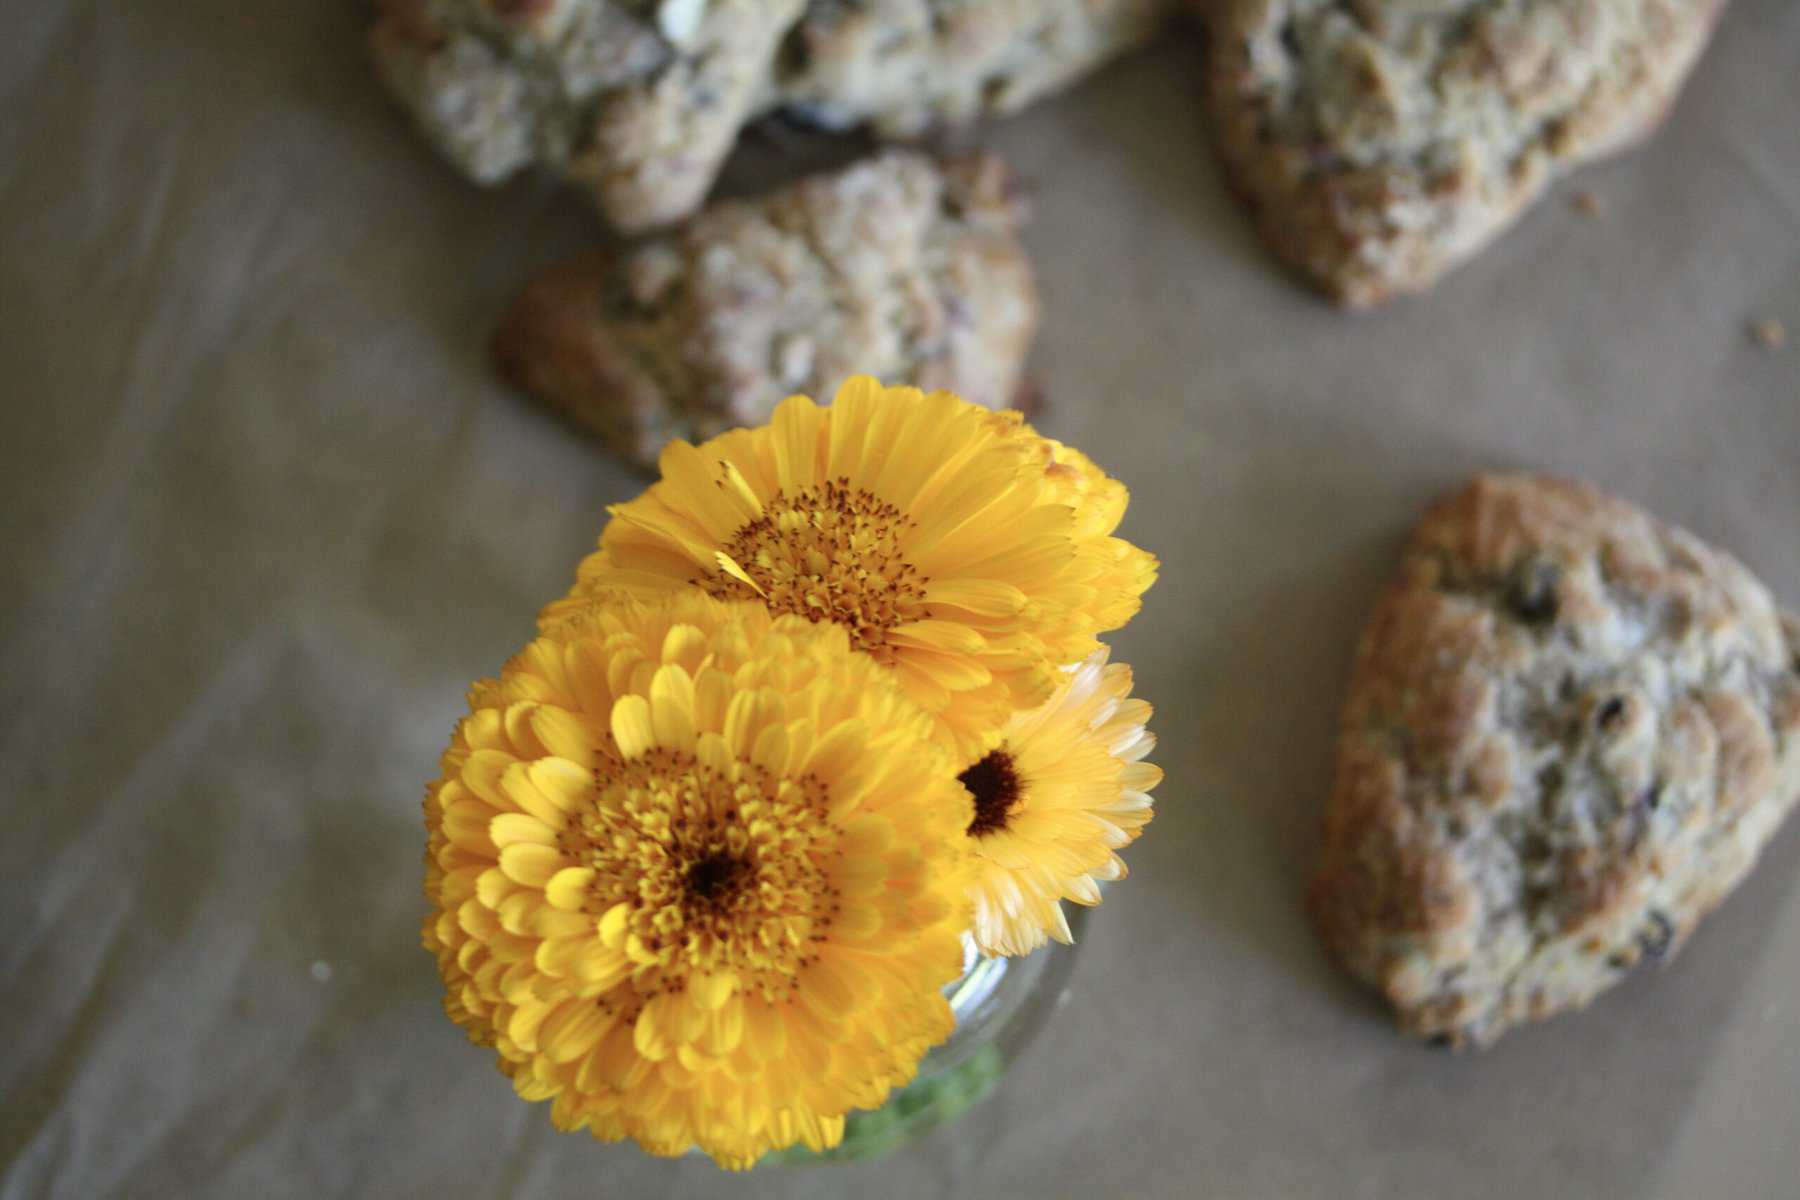 Gluten free scones and flowers